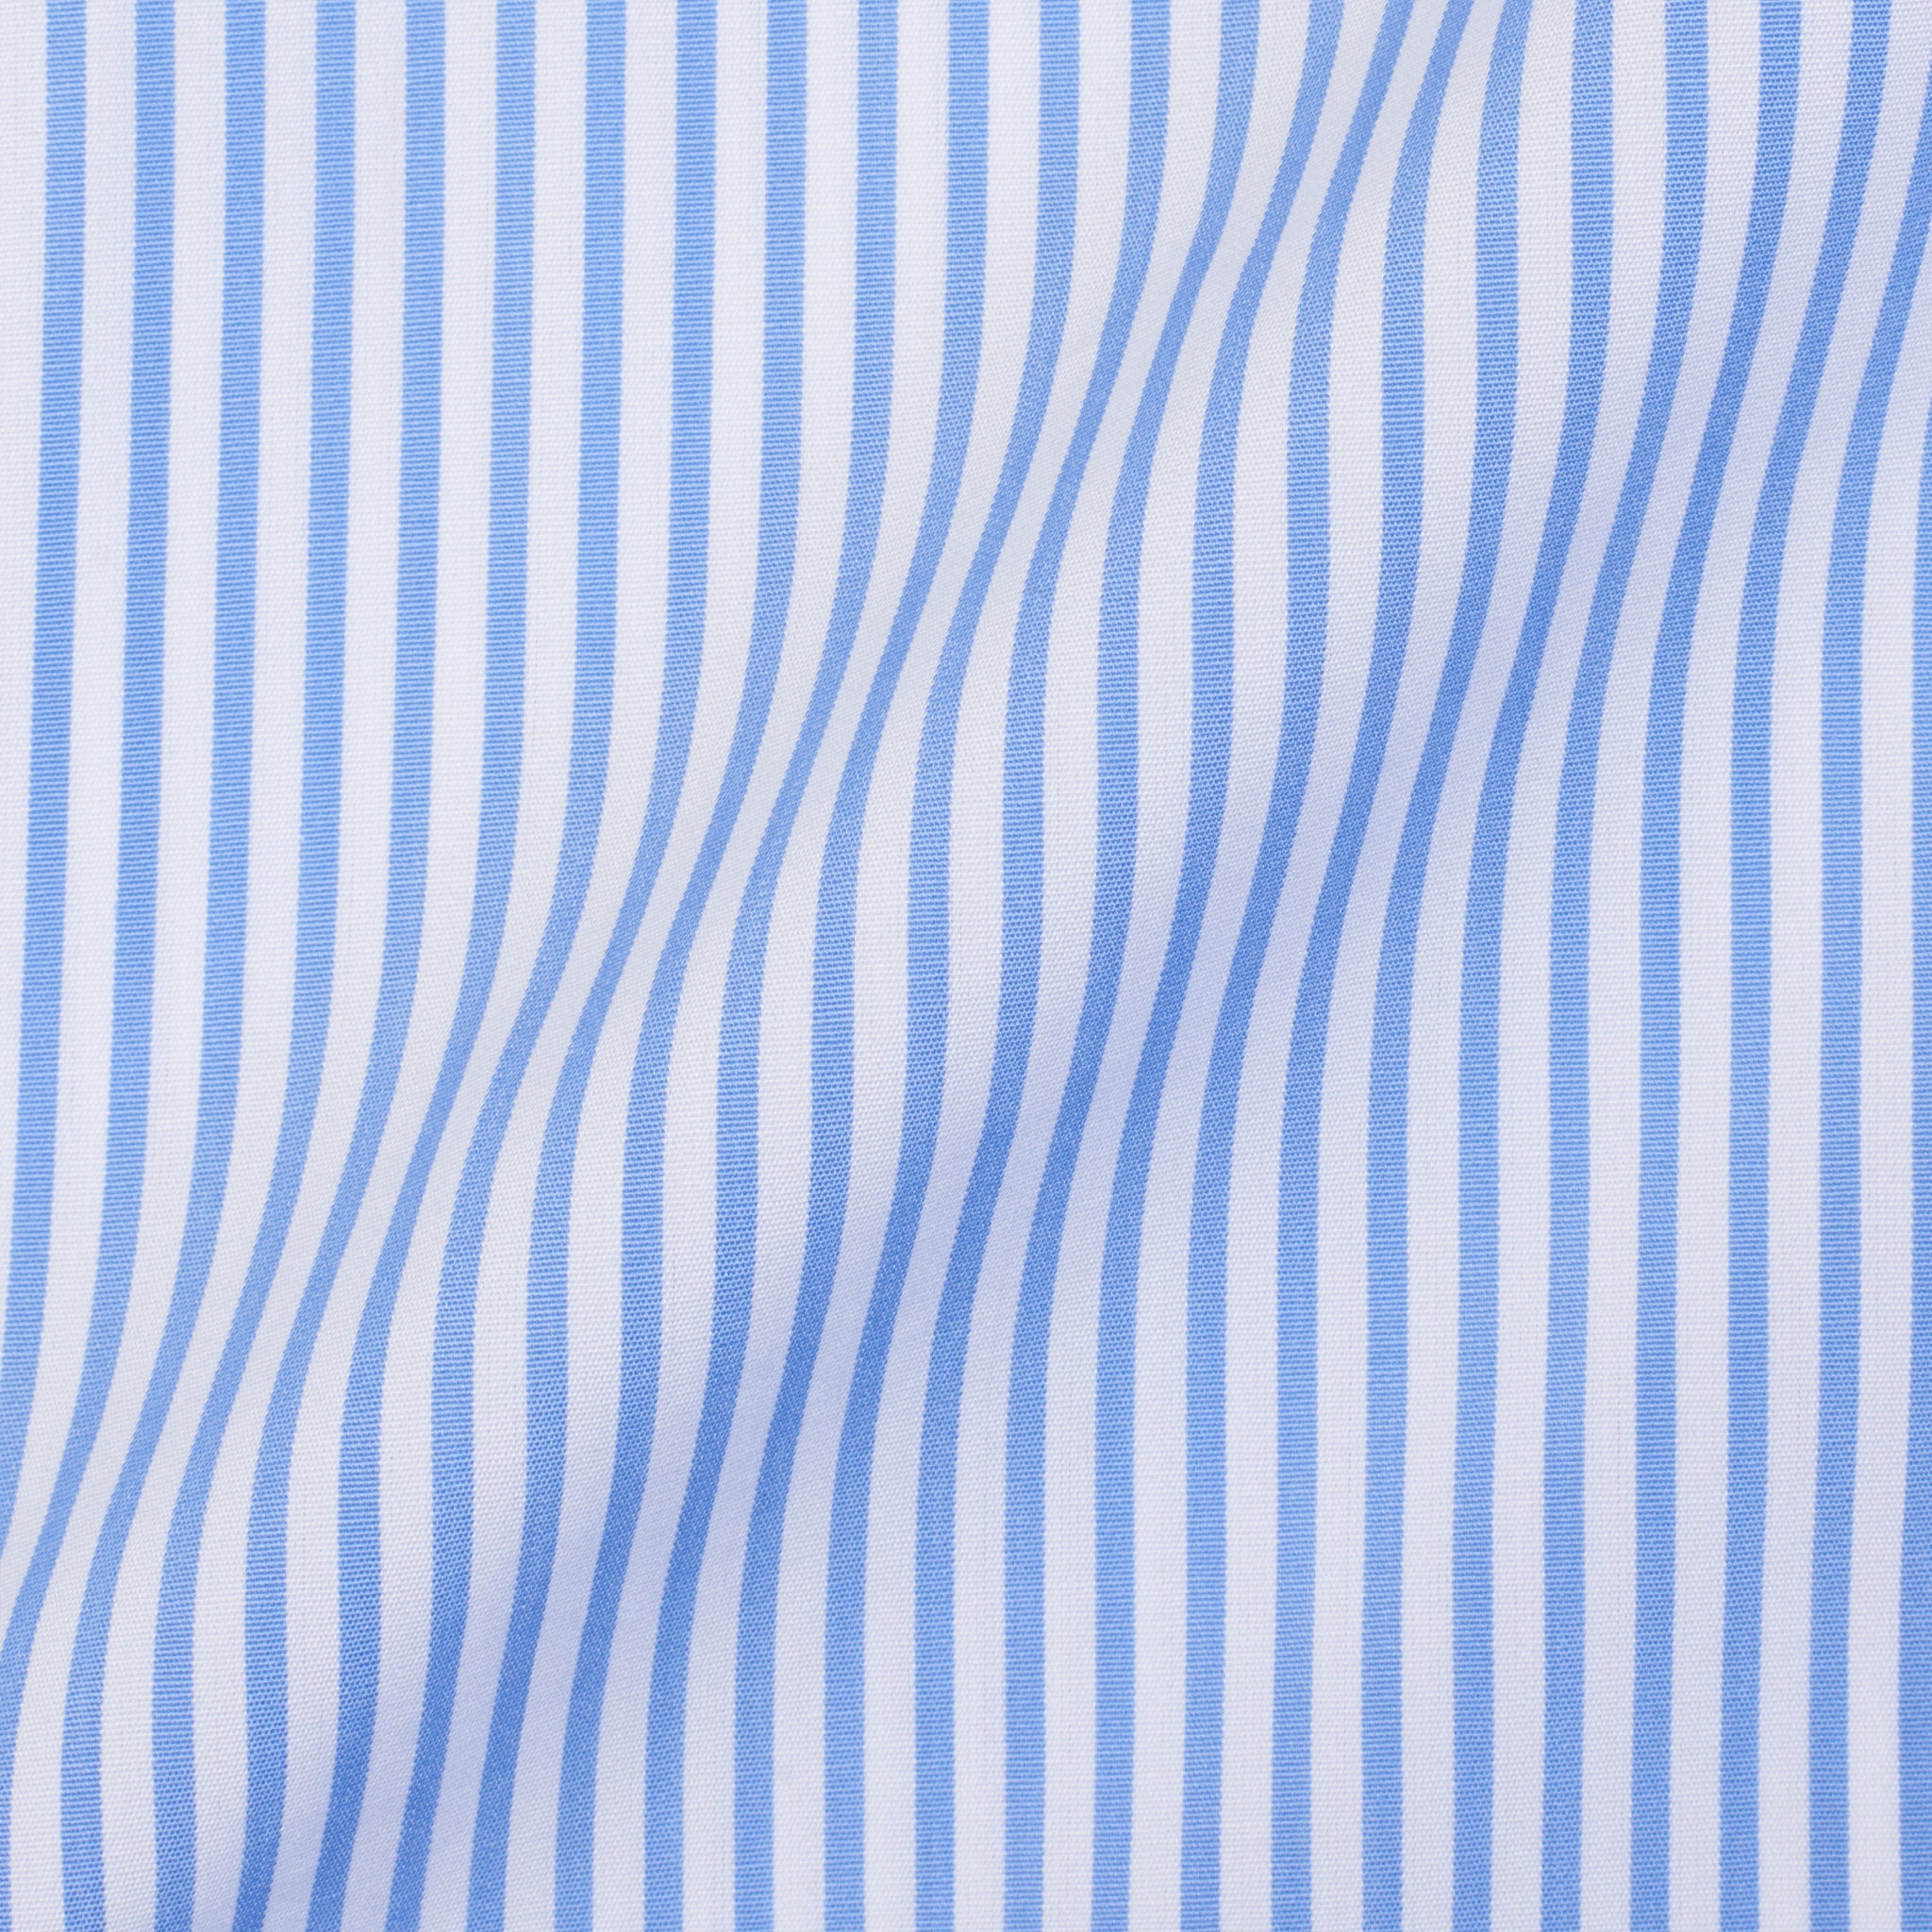 KITON Napoli Handmade Bespoke Blue Striped Poplin Cotton Dress Shirt EU 41 US 16